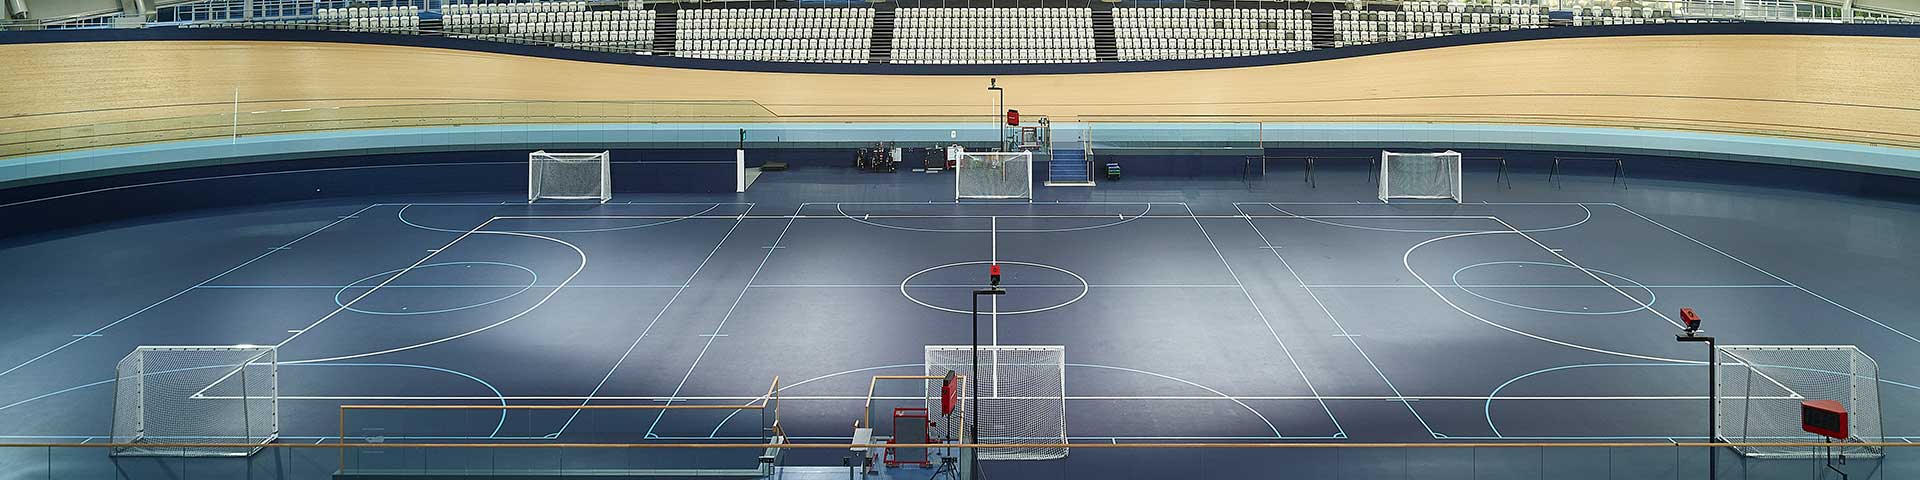 Futsal Courts at the Sleeman Sports Complex